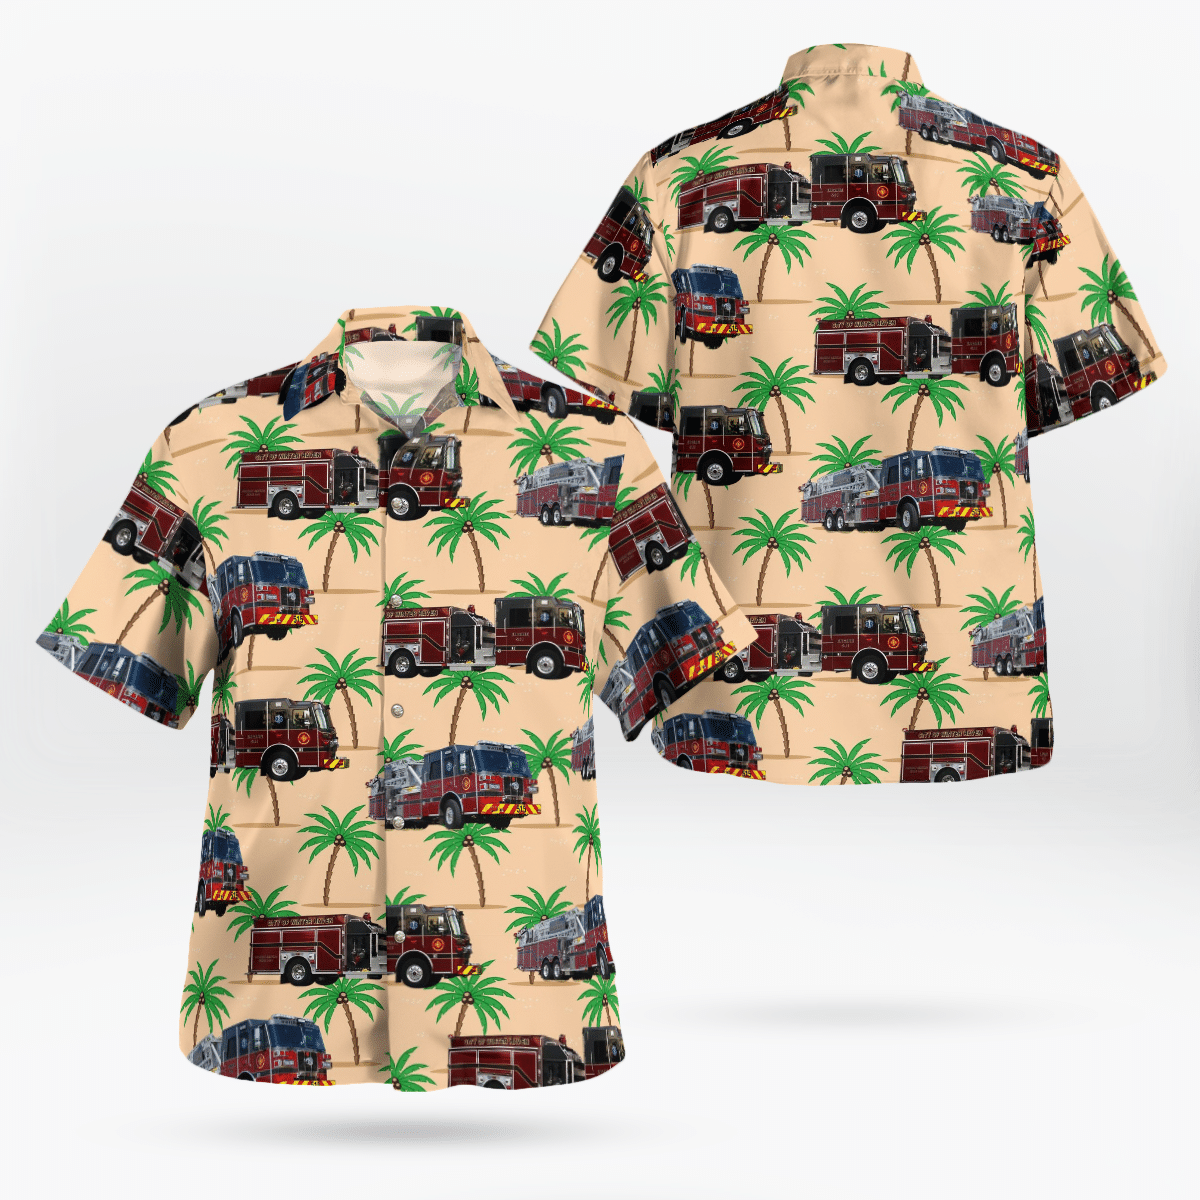 Why don't you order Hot Hawaiian Shirt today? 353